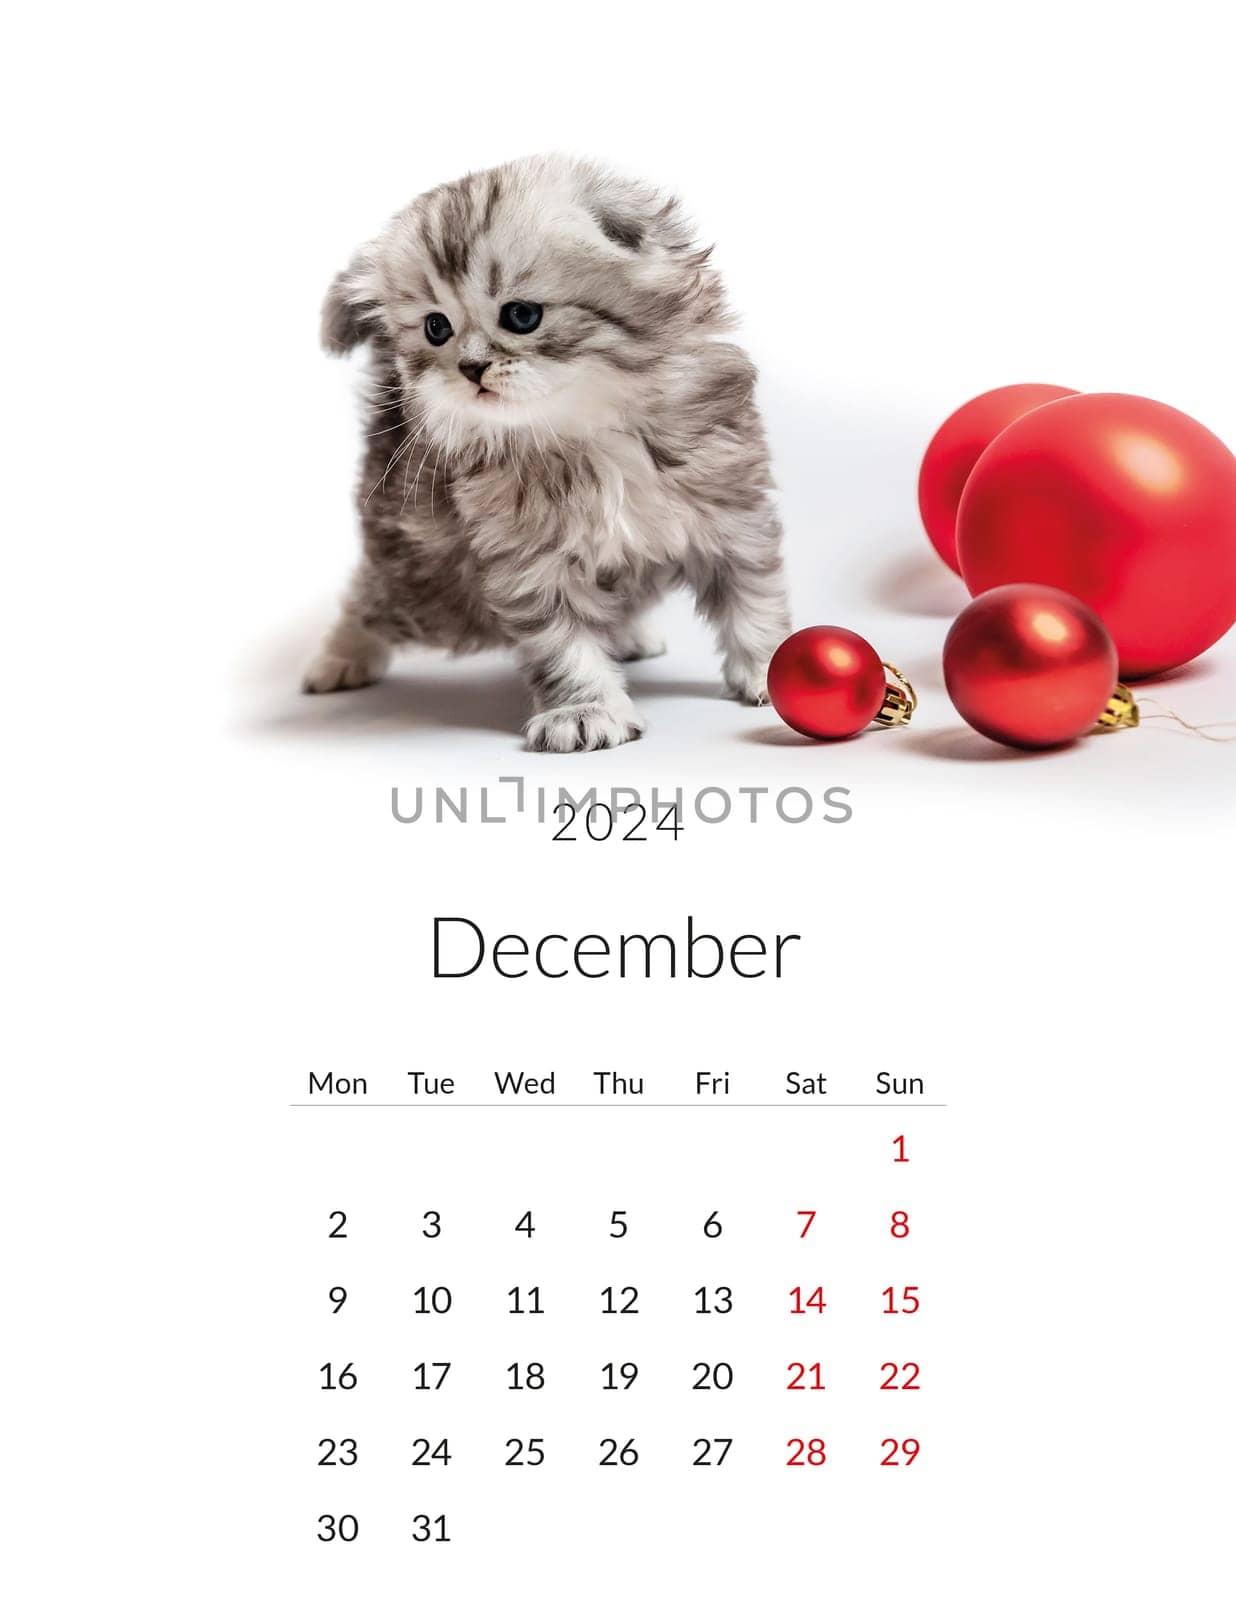 Calendar design for 2024 year by tan4ikk1